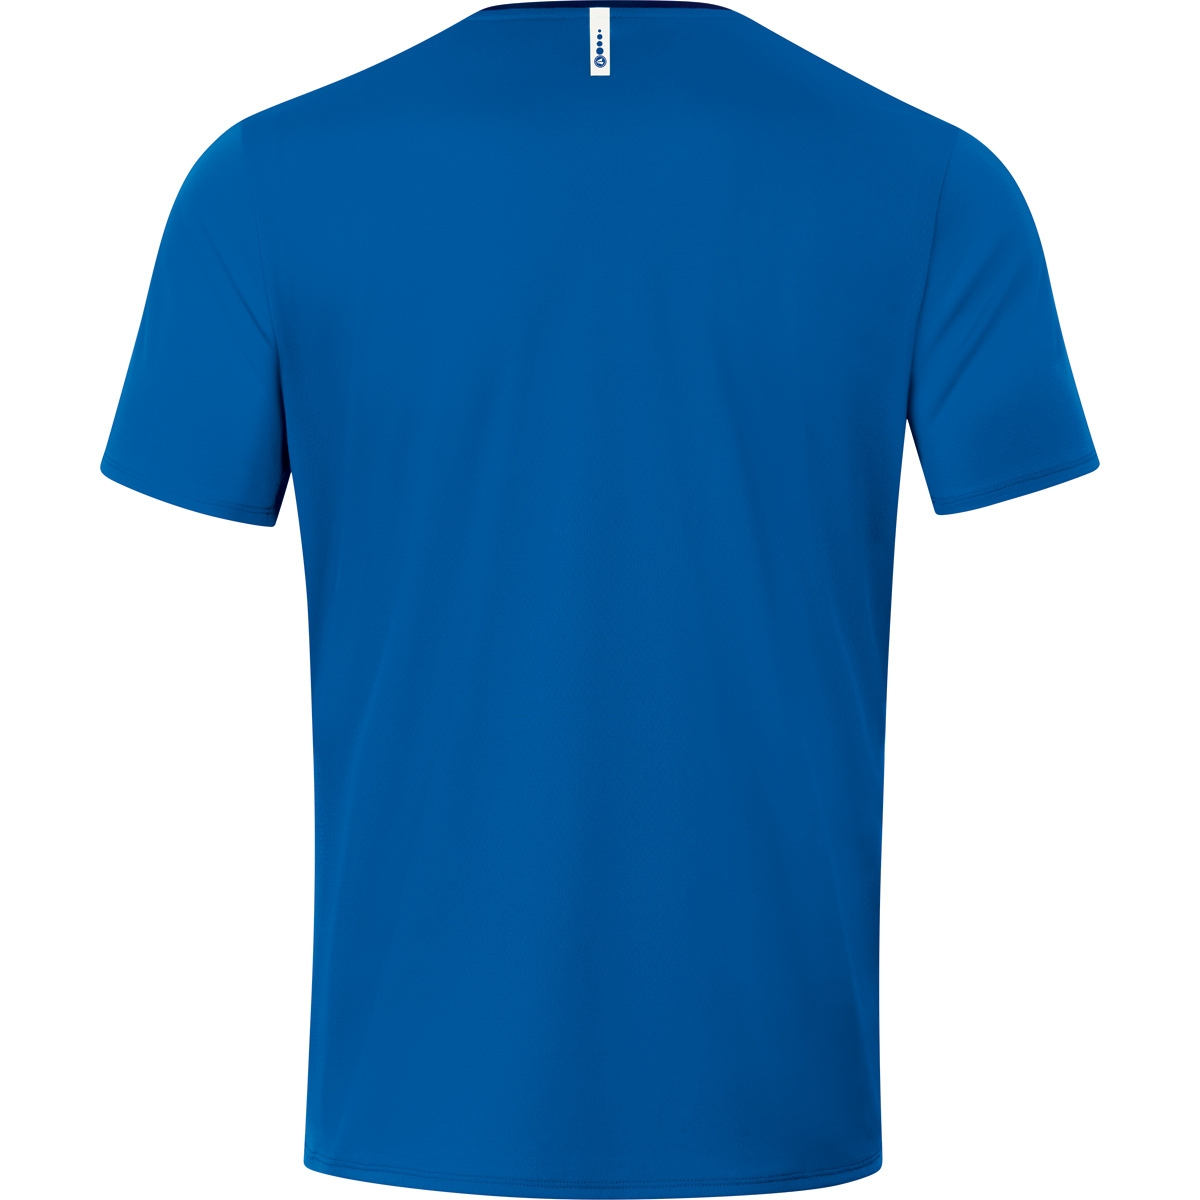 T-Shirt 2.0 S, JAKO 6120 Gr. Champ Herren, royal/marine,